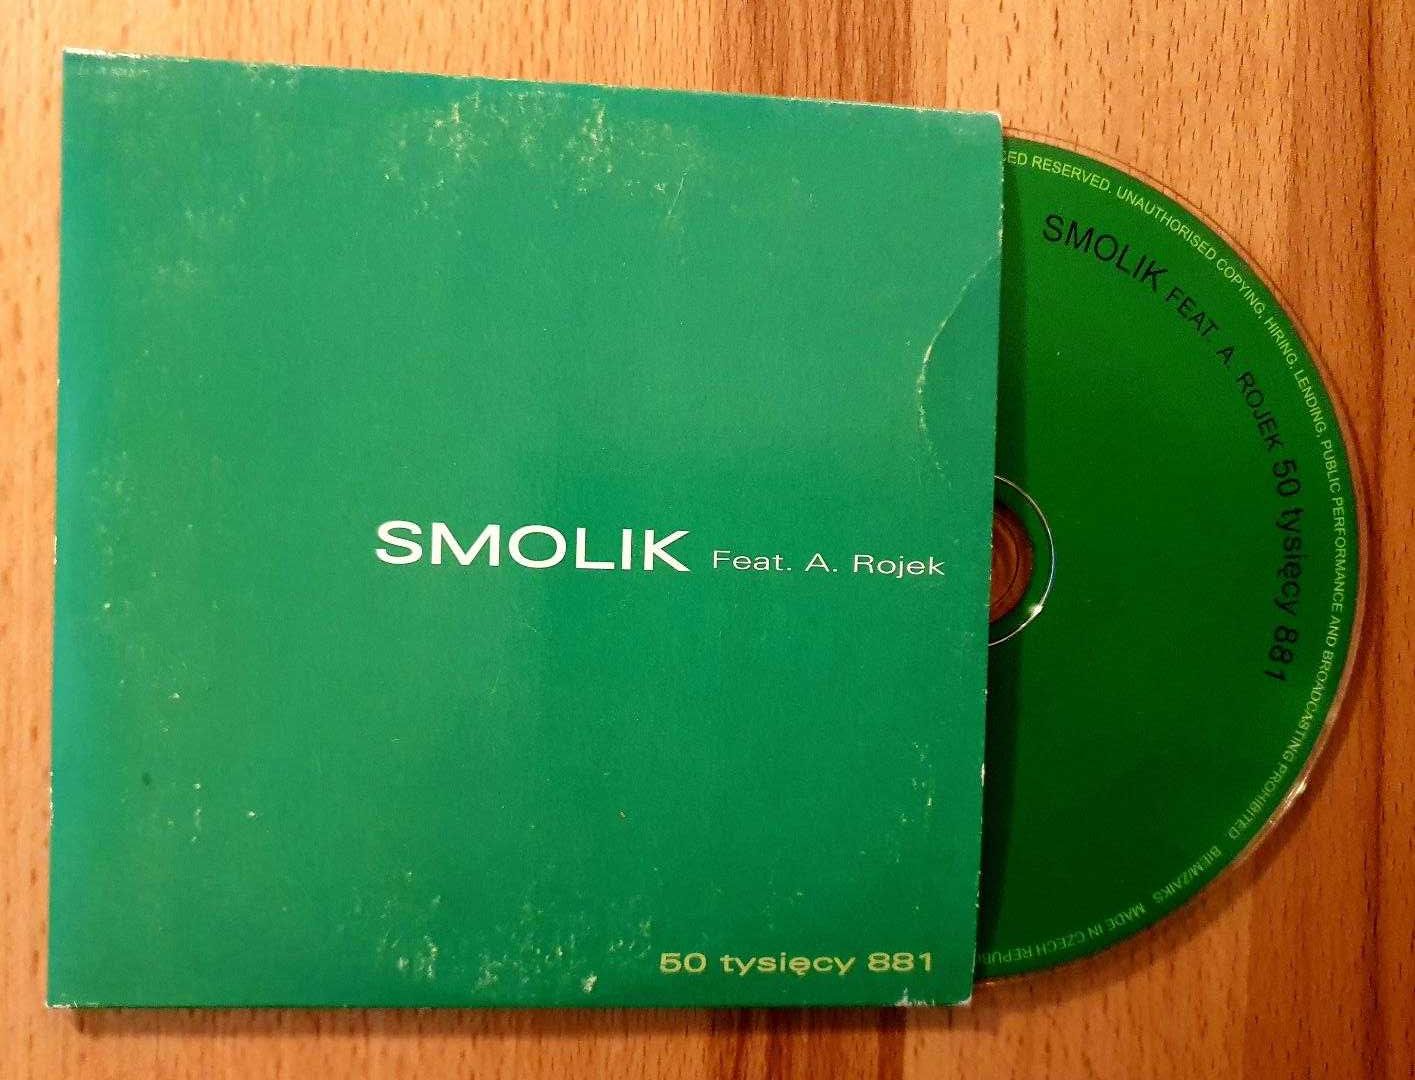 Smolik Feat. A. Rojek - "50 tysięcy 881" - Promo CD